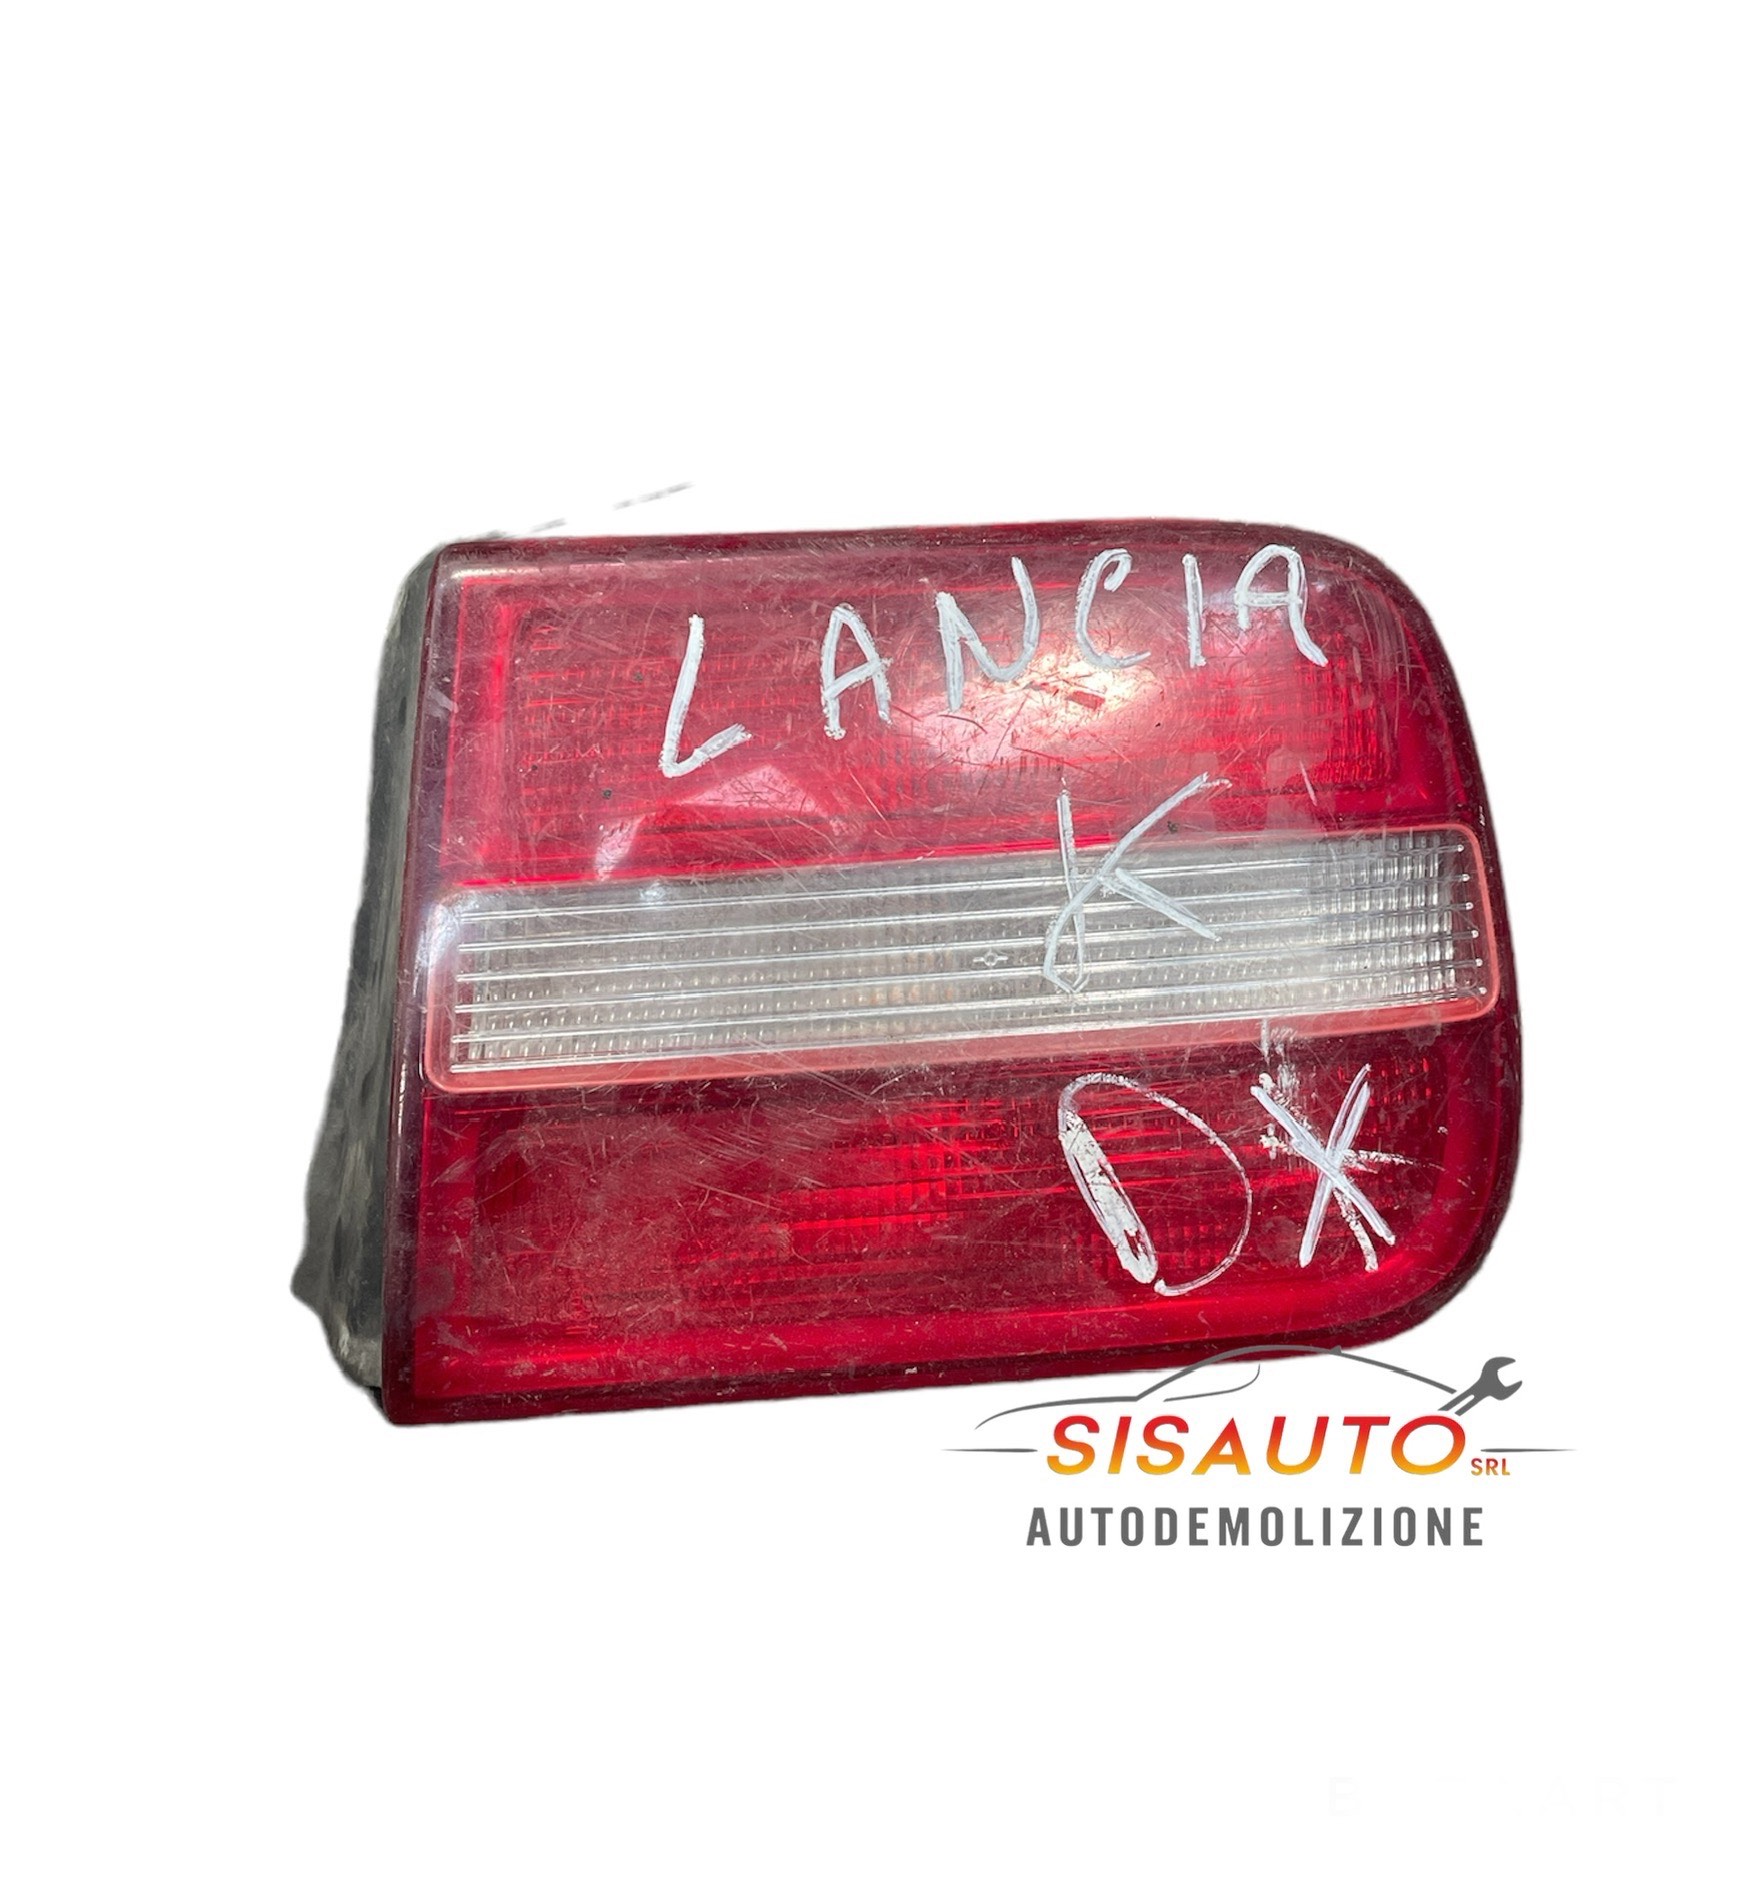 Fanale/Stop posteriore destro - Lancia K - 2000